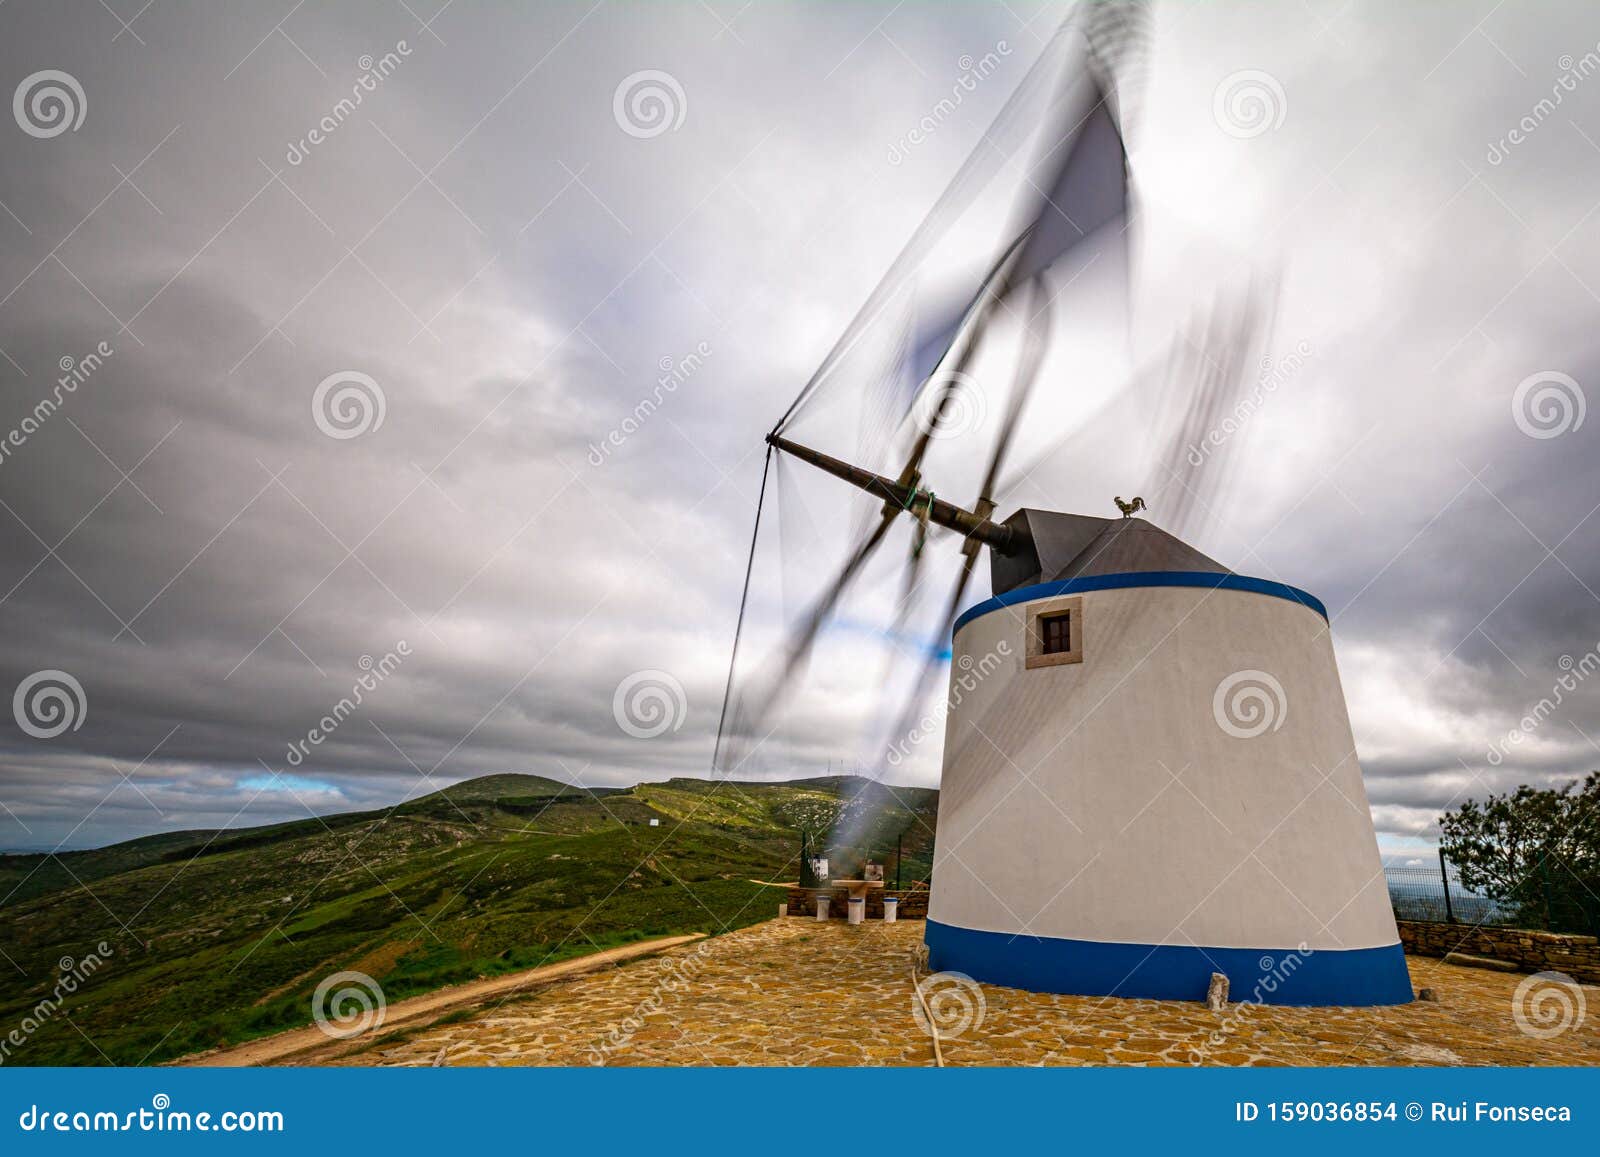 windmill in portuguese mountain. moinho de vento em paisagem portuguesa.